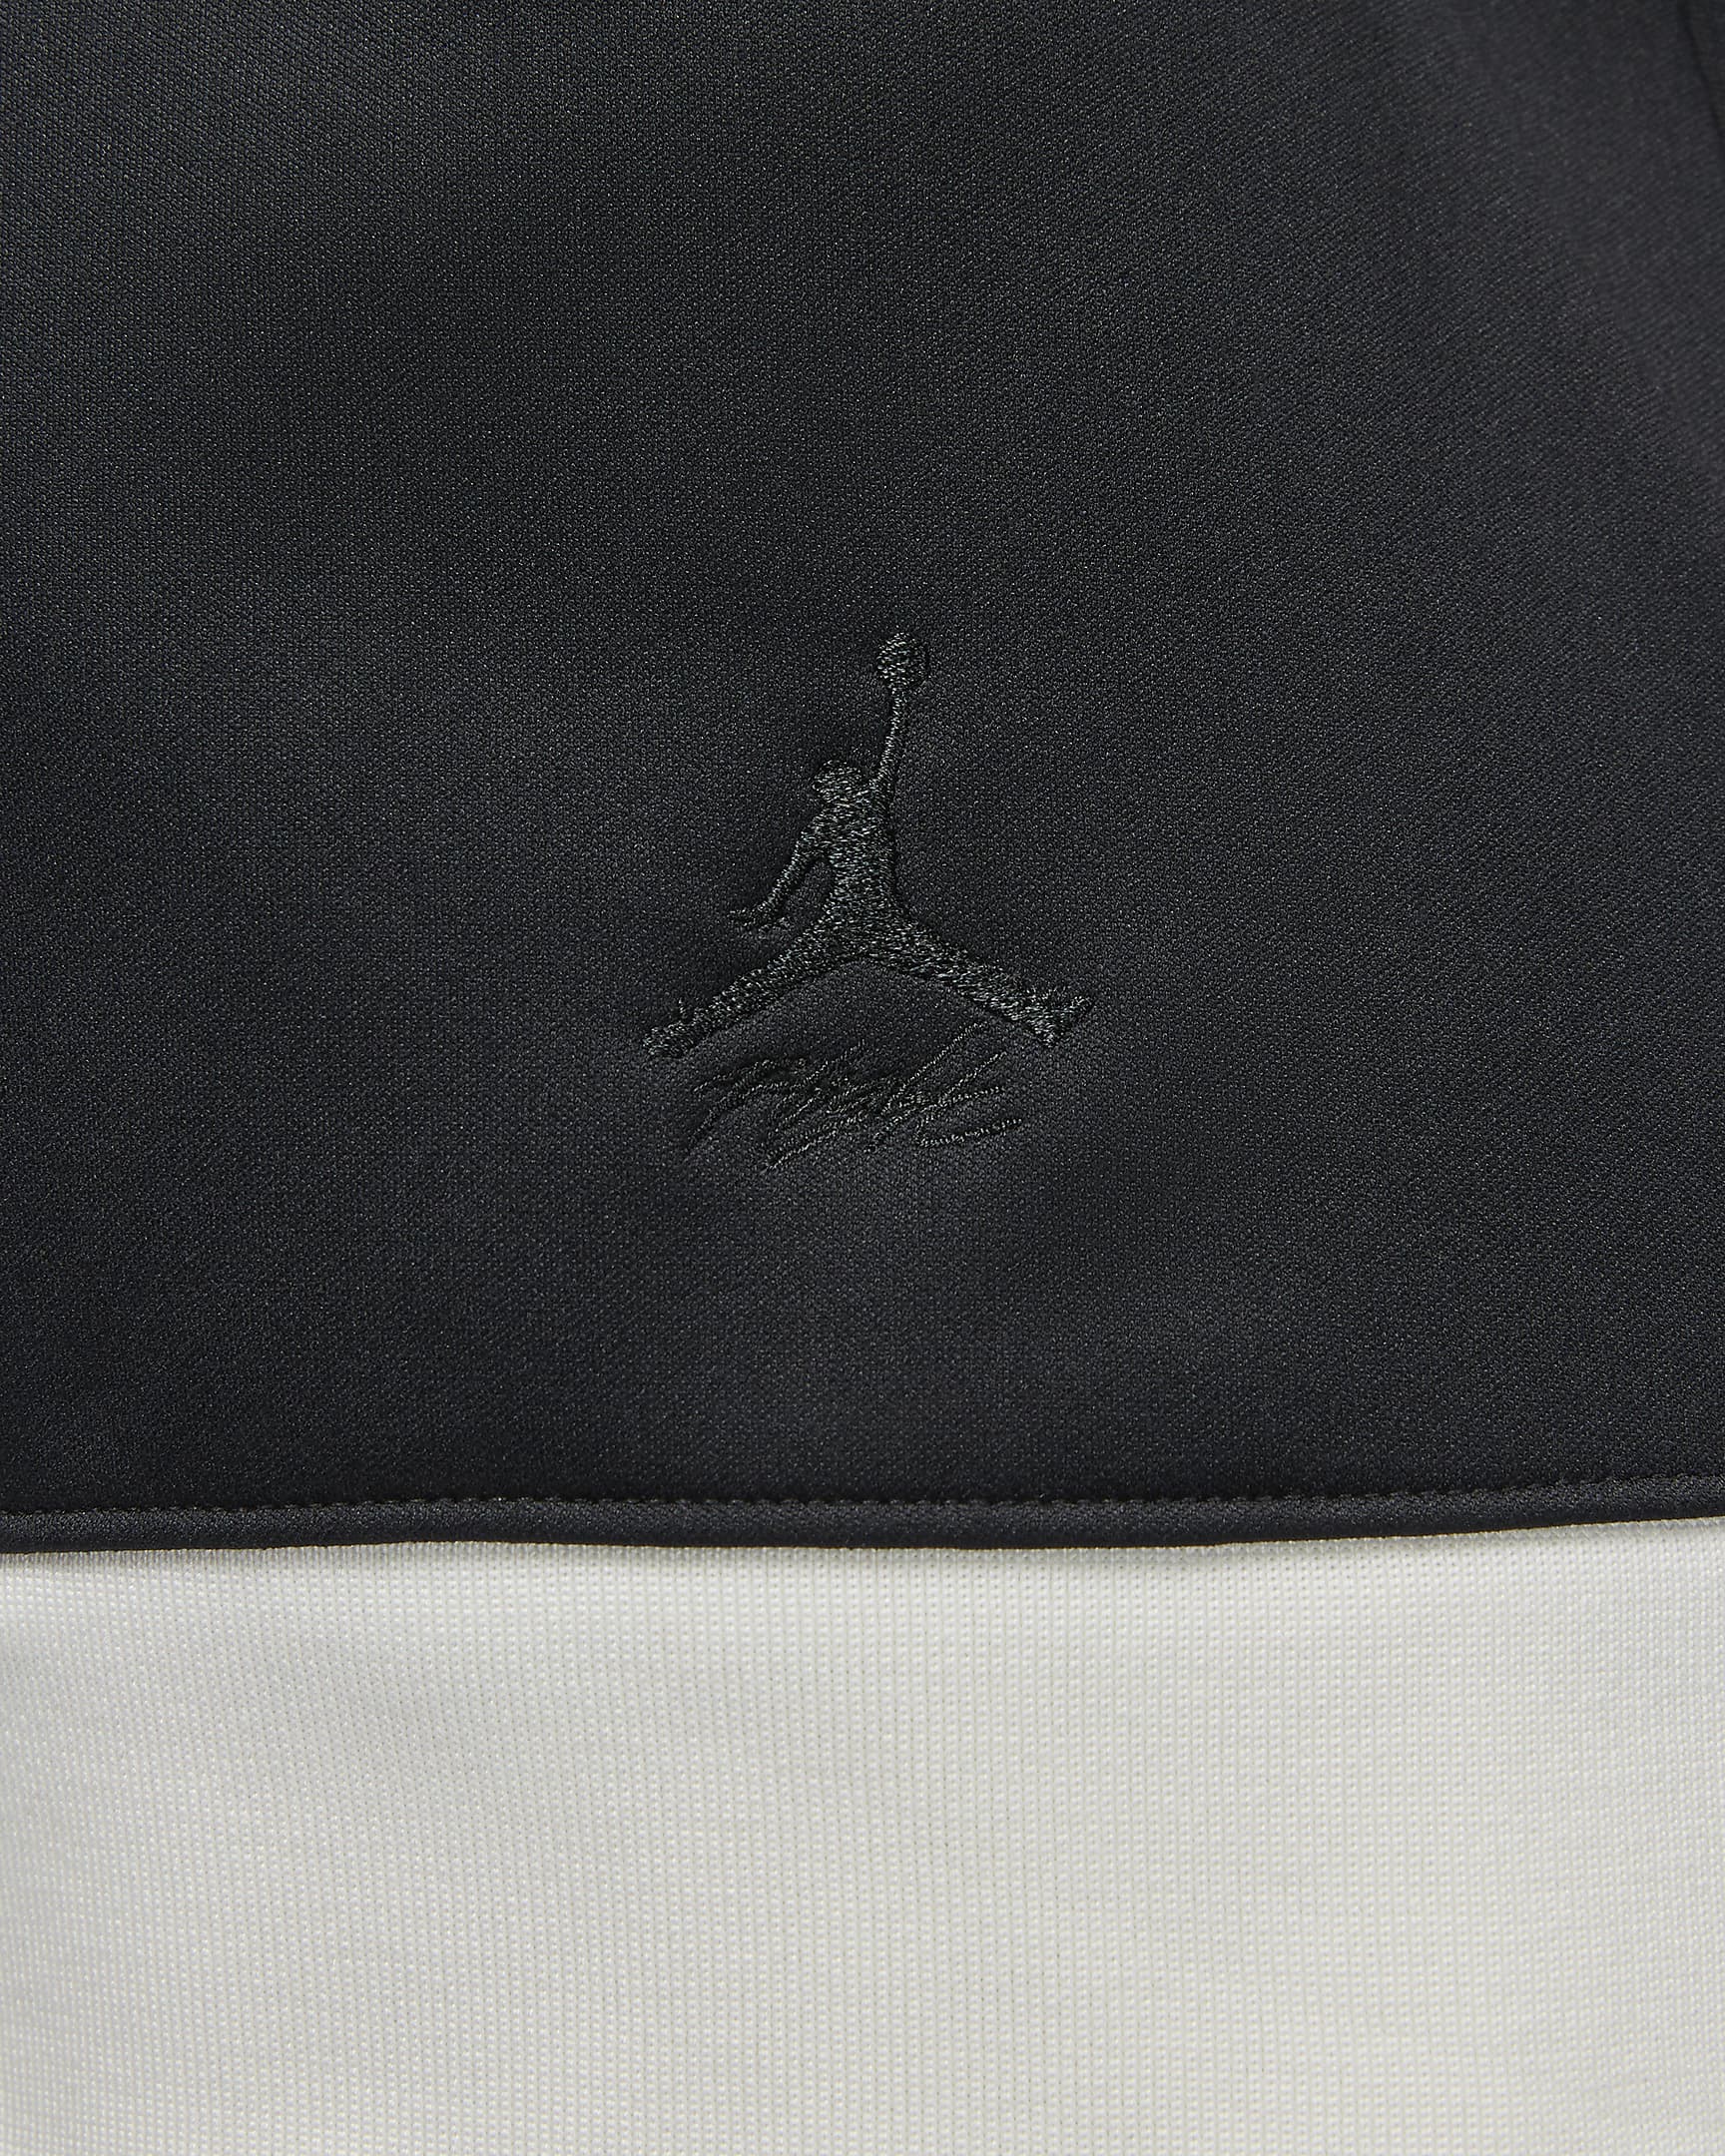 Jordan (Her)itage Women's Suit Top. Nike HR